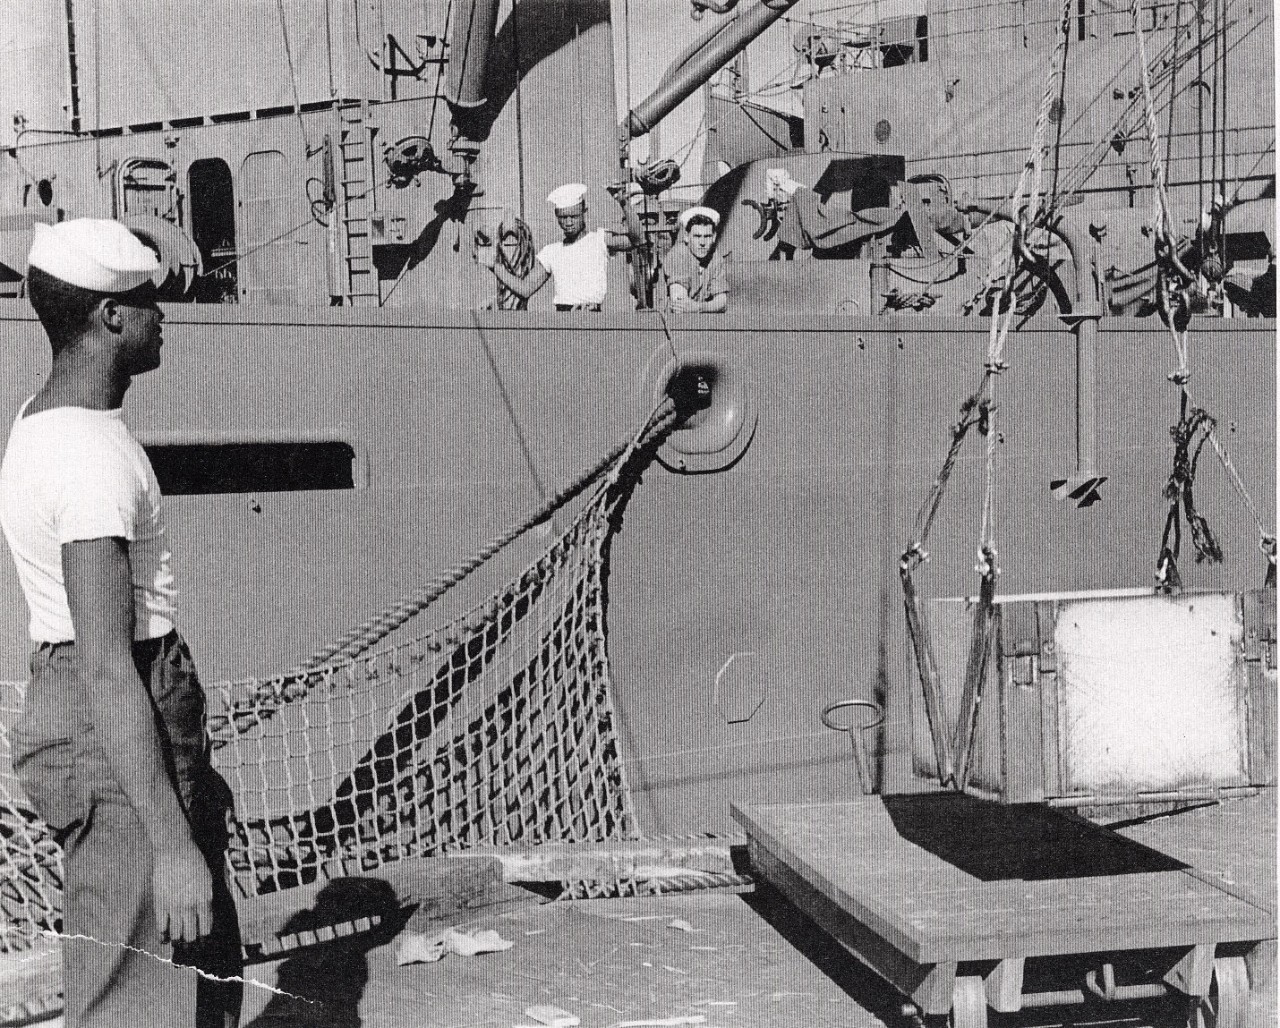 Loading ordnance aboard ship at Port Chicago Naval Magazine, circa 1943/44.